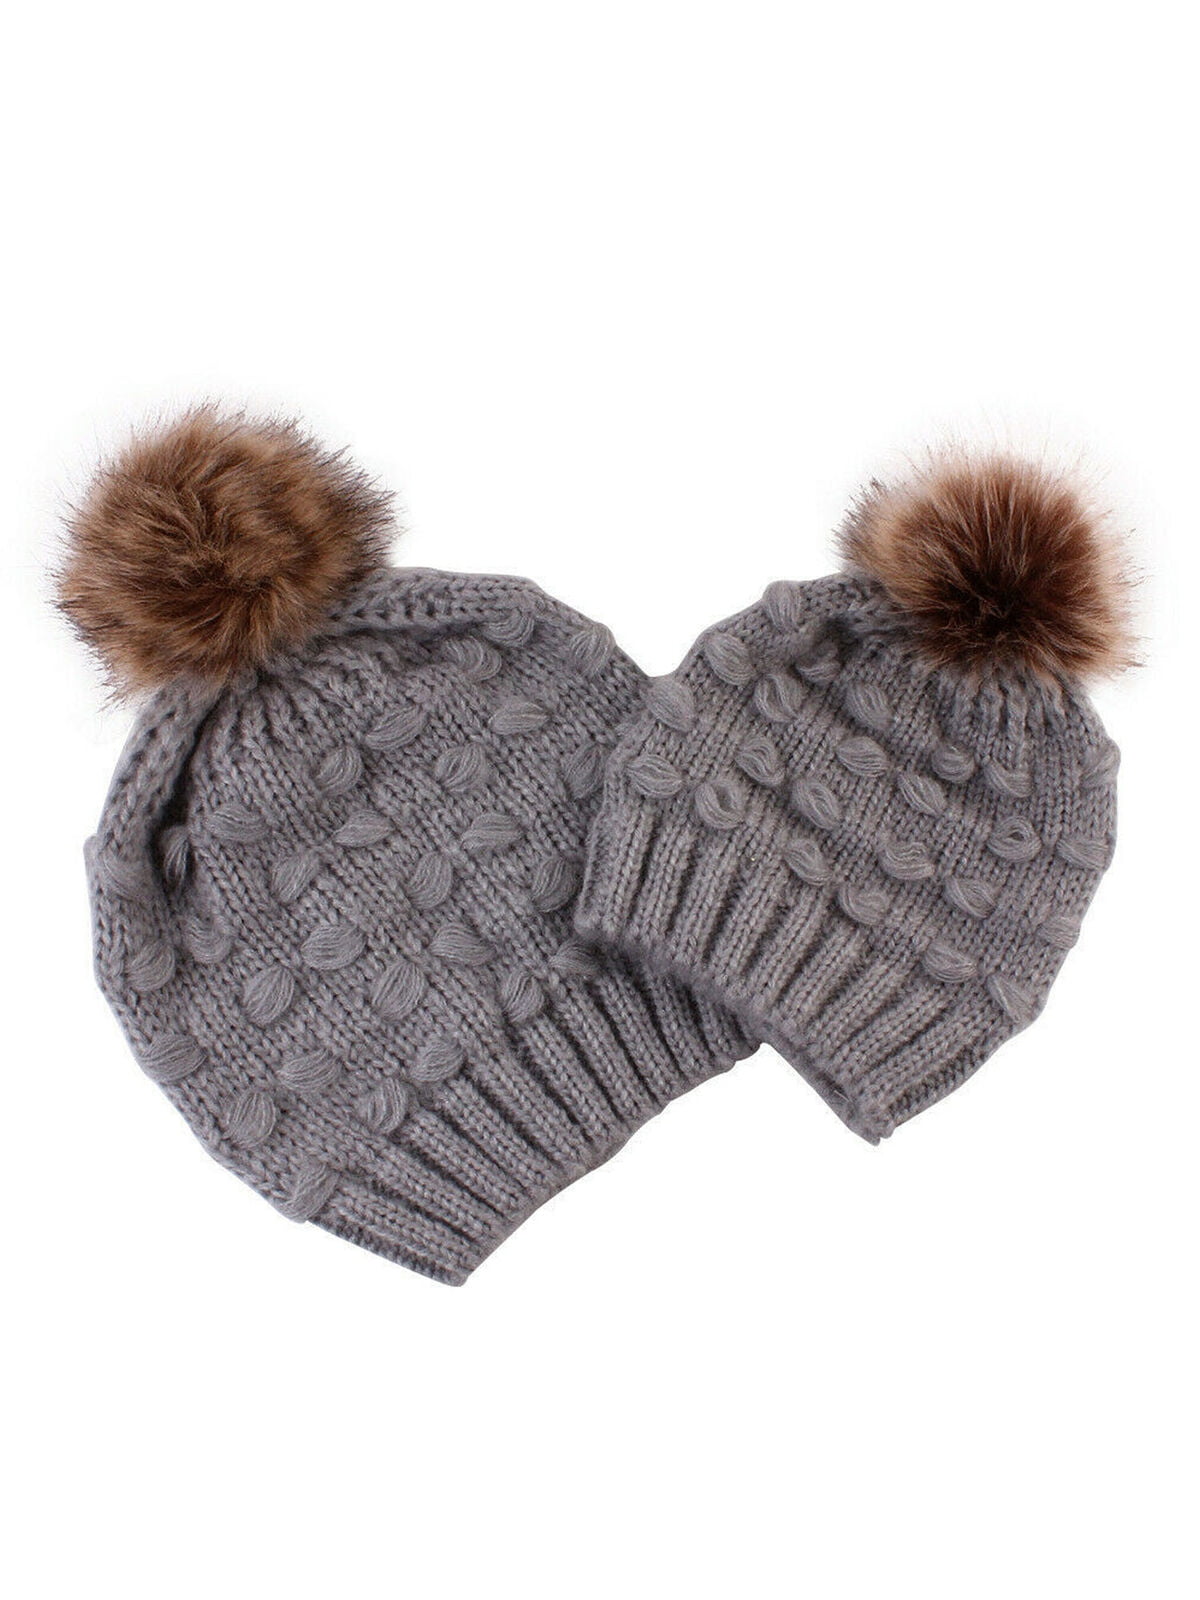 2PSC Mom&Newborn Baby Hats Winter Warm Women Boy Girl Hairball Knit Beanie Caps 